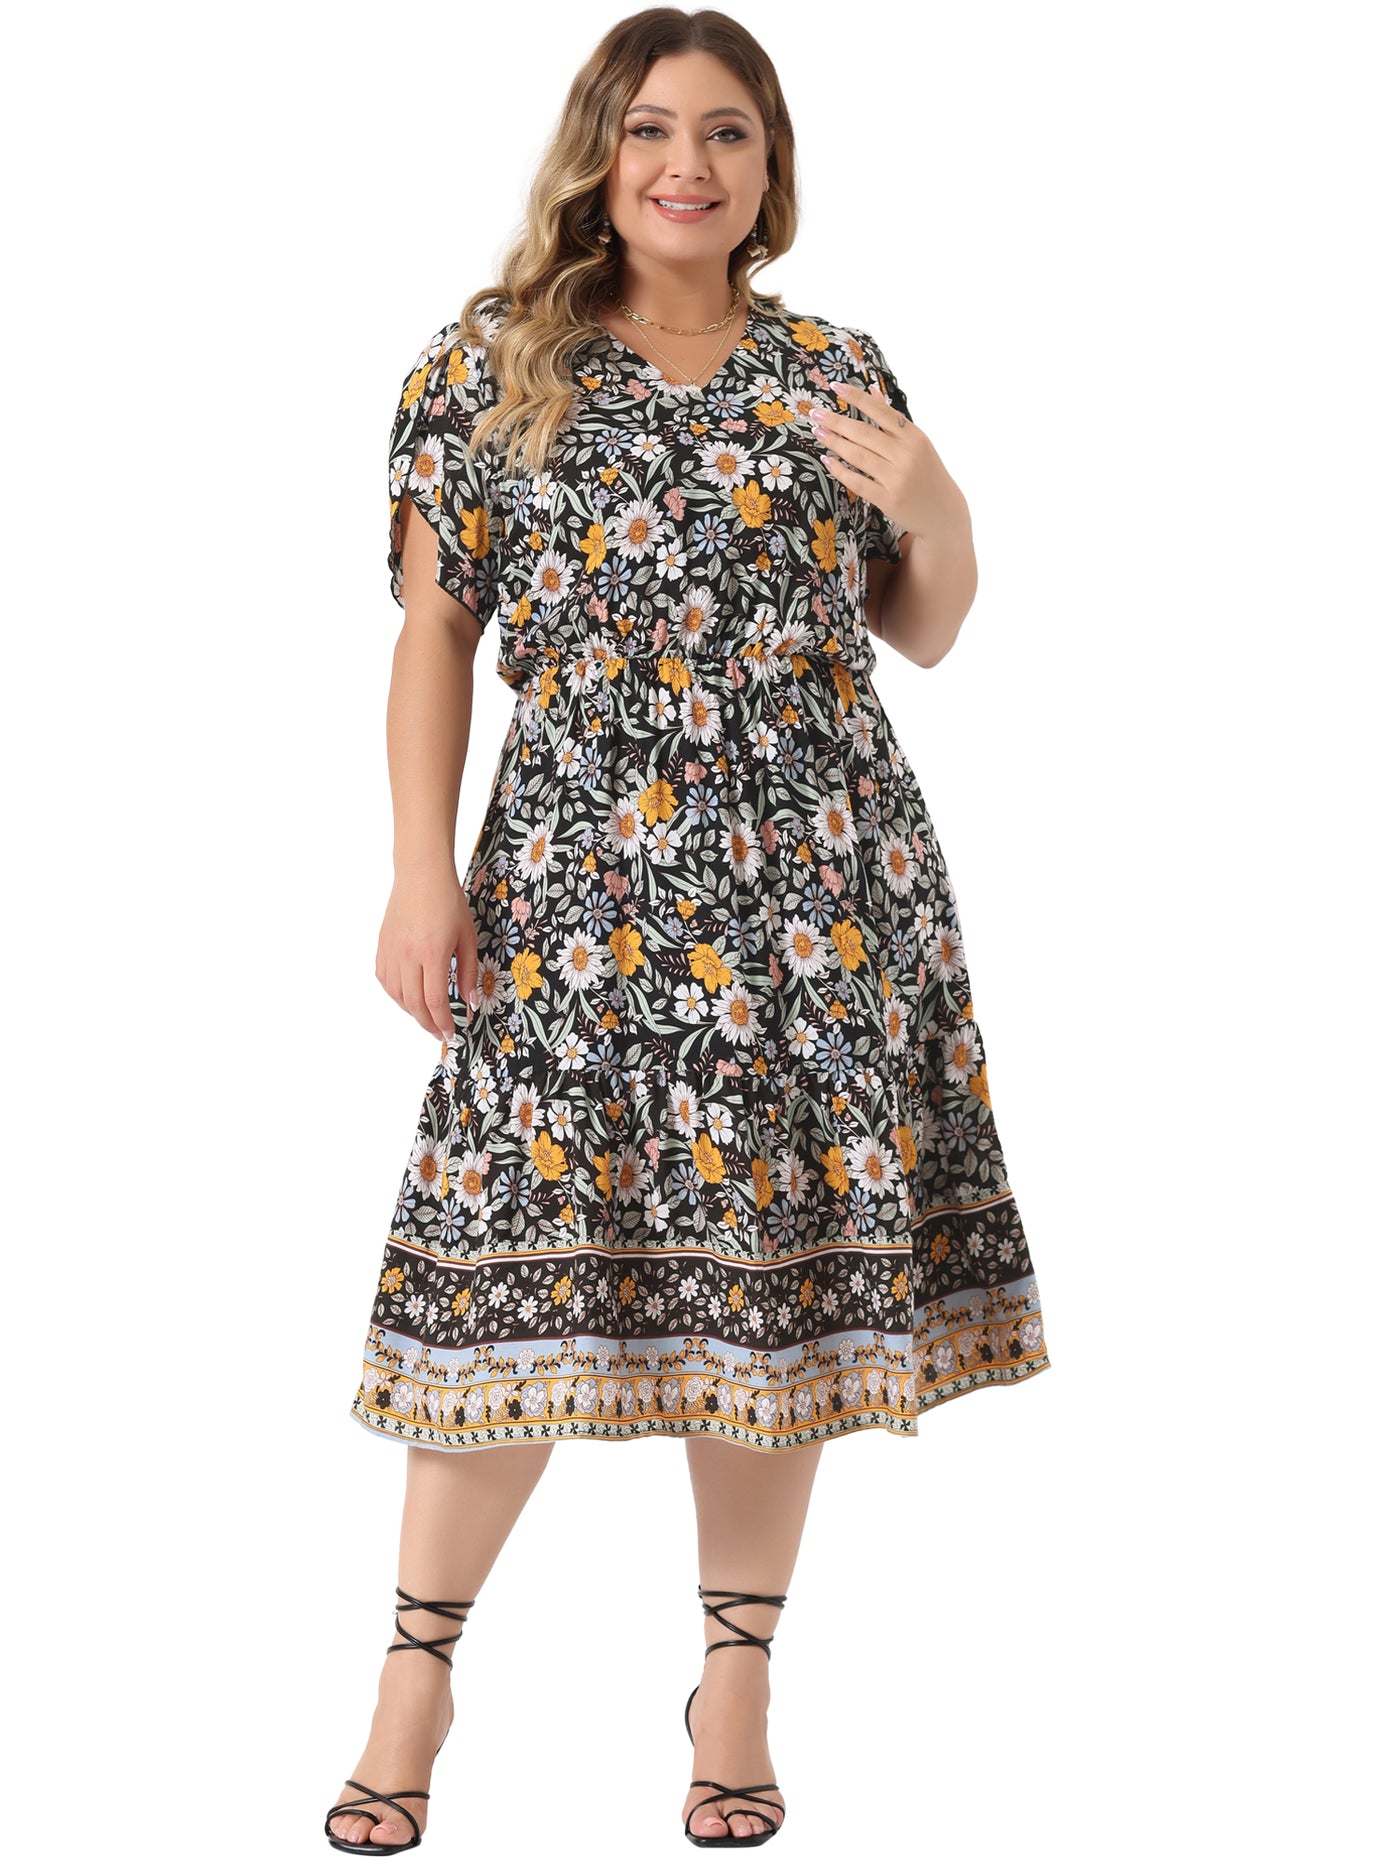 Bublédon Plus Size Summer Dresses Boho for Women Casual V Neck Short Sleeve Floral Print Beach Midi Dress